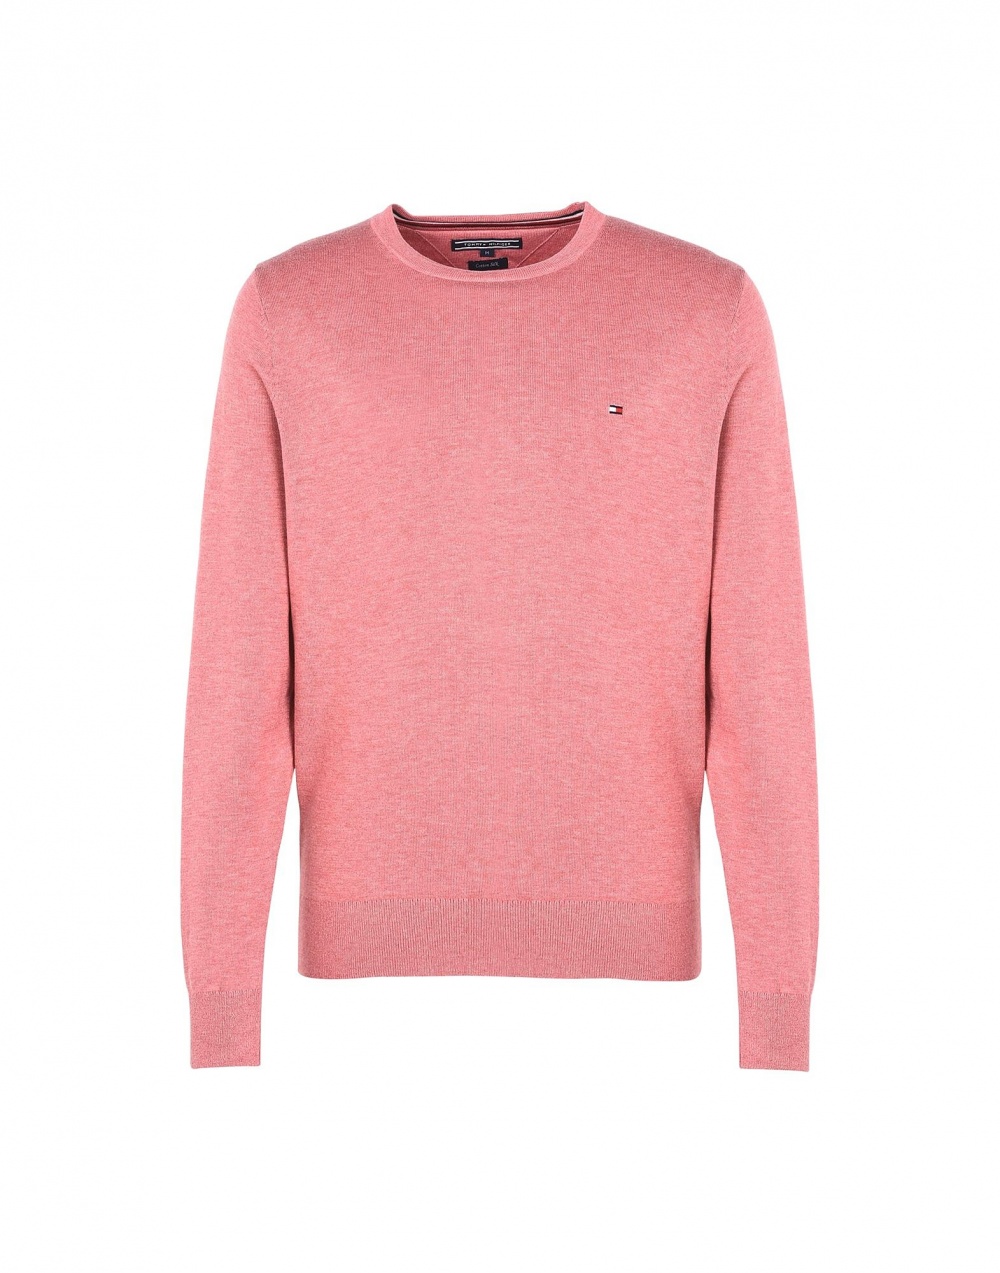 Tommy Hilfiger джемпер - пуловер - свитер, размер M-L